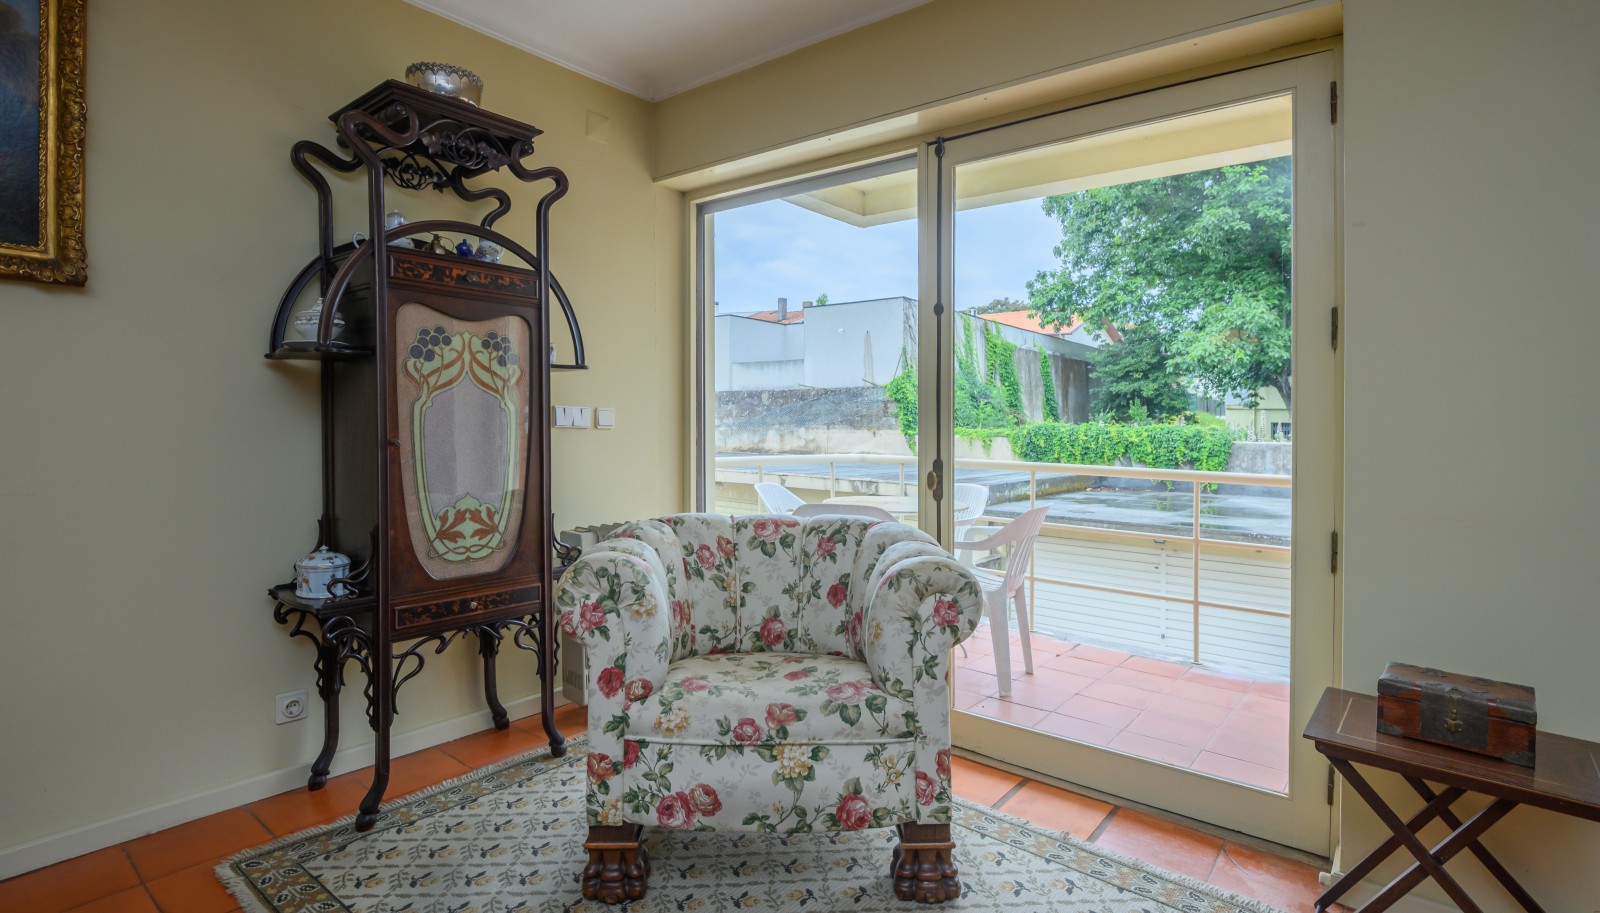 4+1 Dormitorio Villa, en venta, Pinheiro Manso, Porto, Portugal_229566